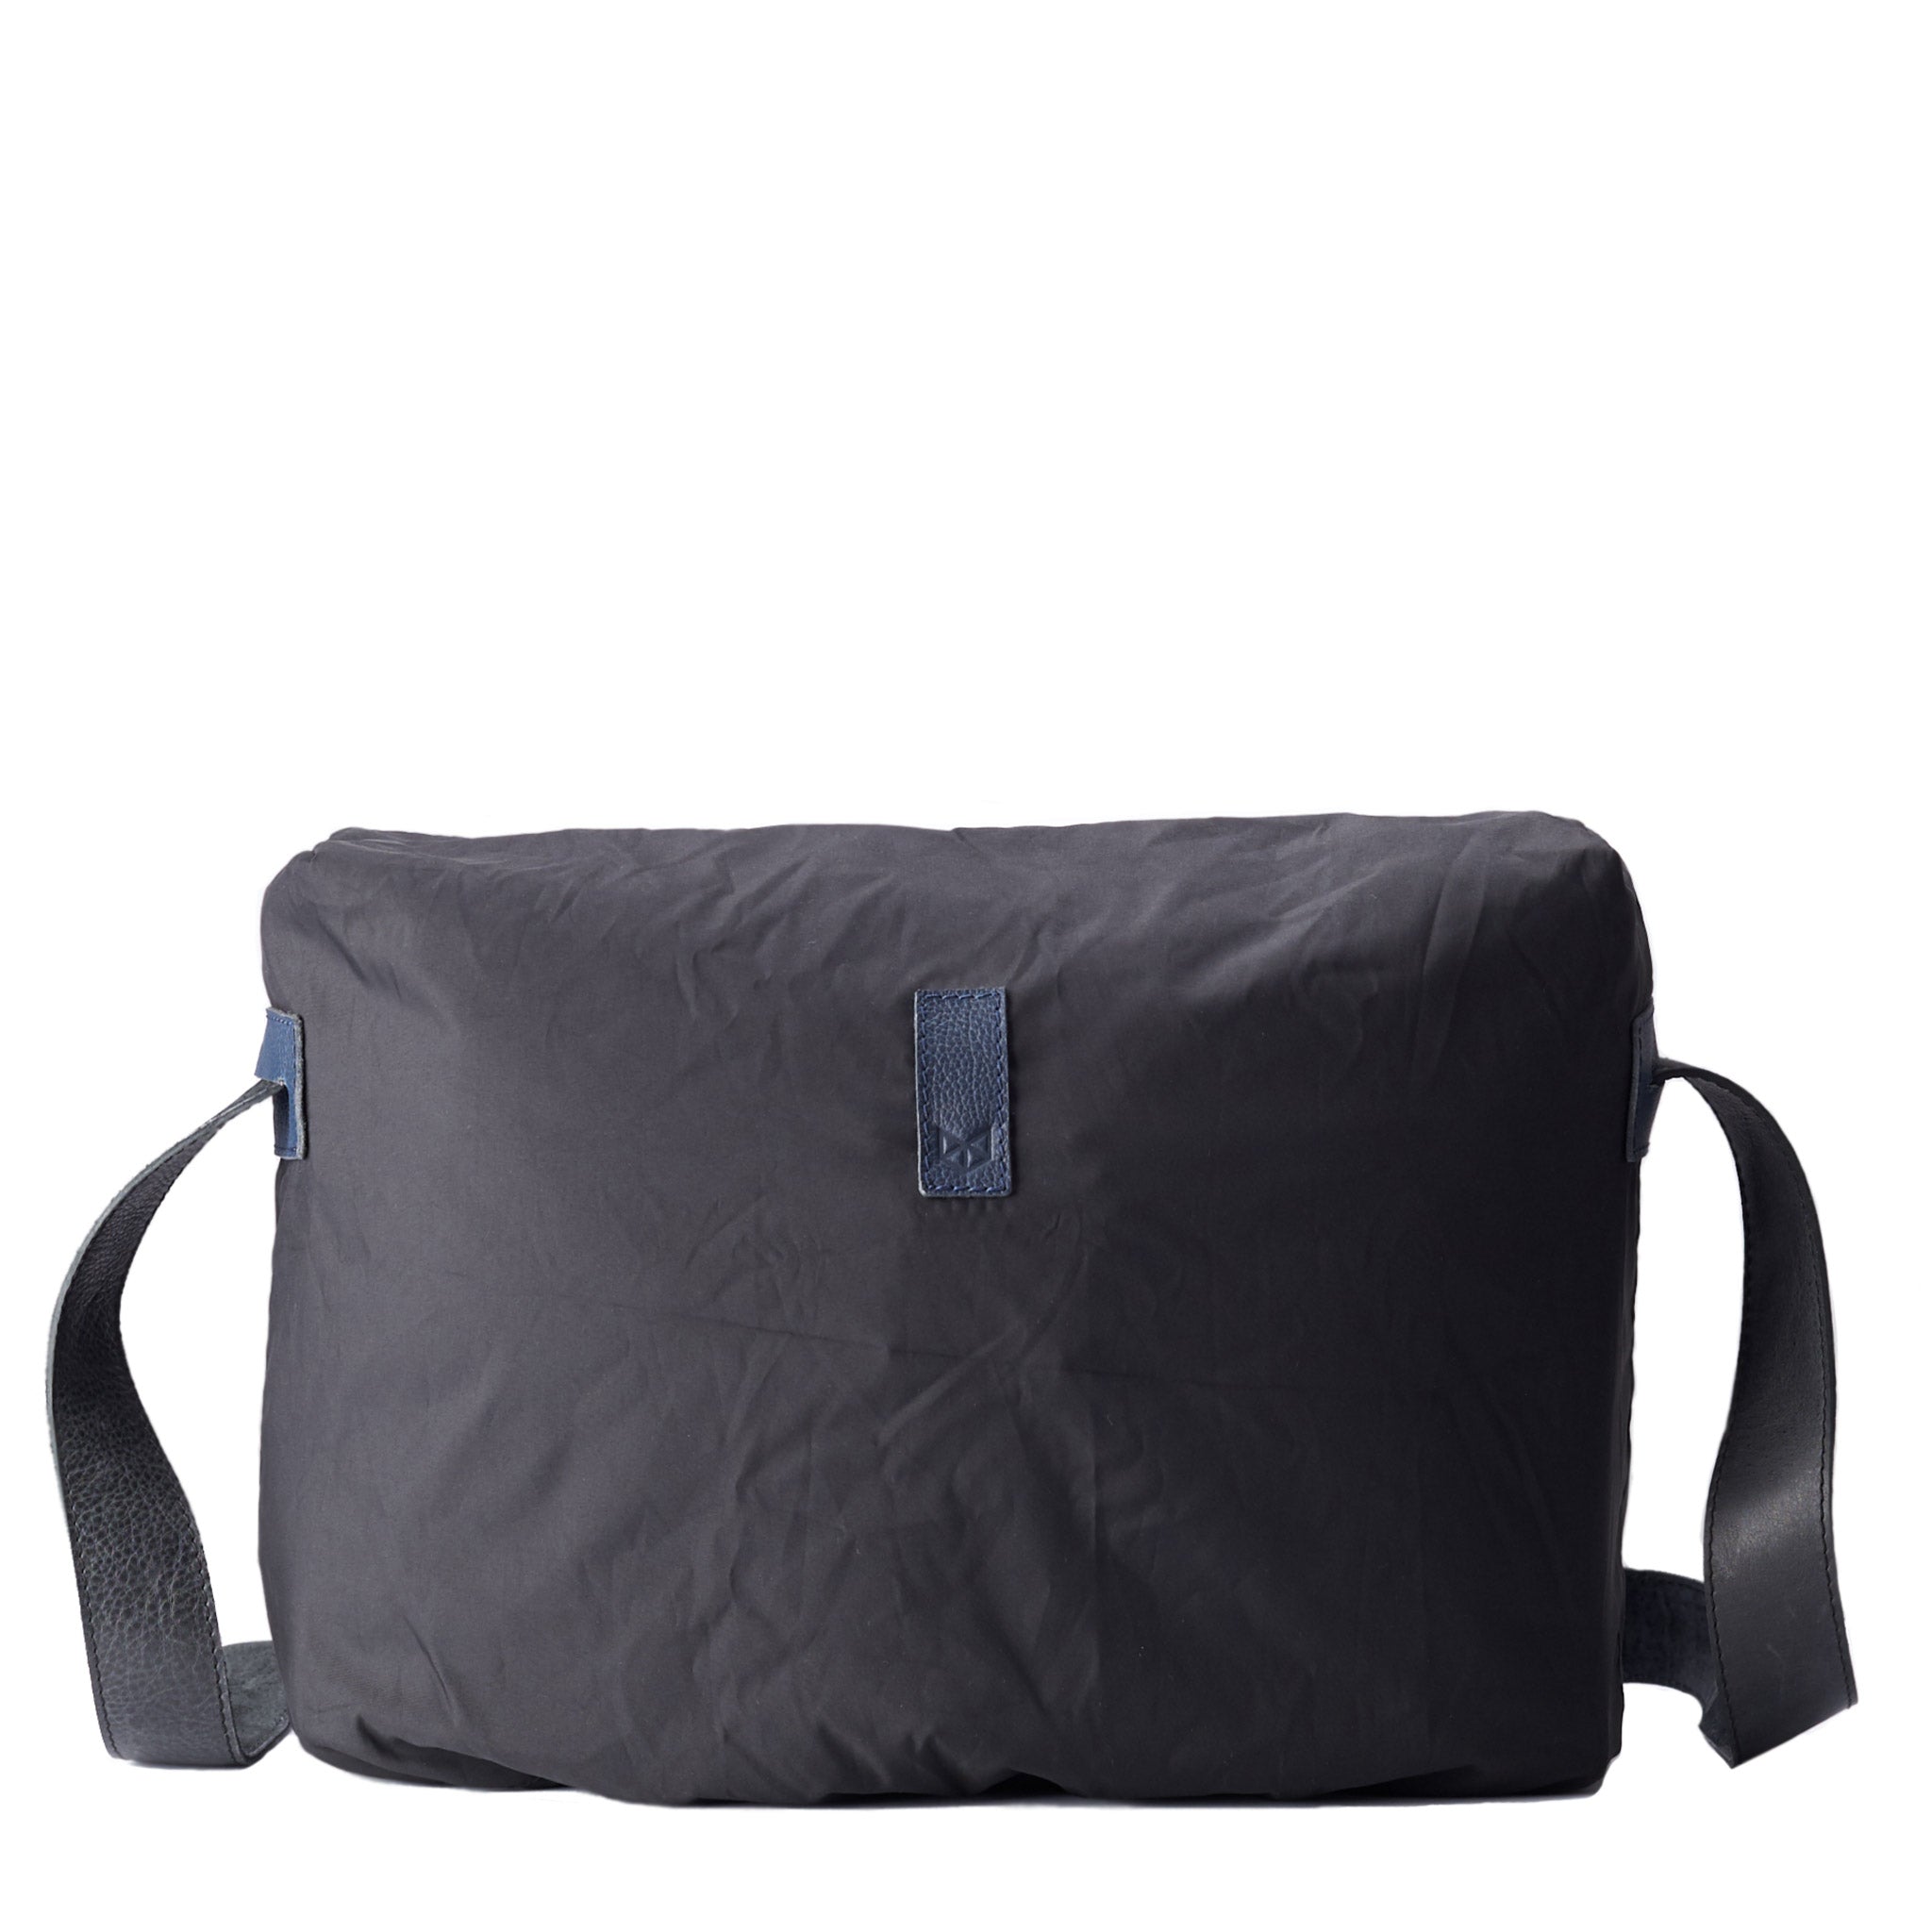 KHOOBREZ Waterproof Dust Proof Rain Cover for CAMERA, Messenger Shoulder,  Office, Handbag Briefcase, Tote, Crossbody bag OBC(Black)